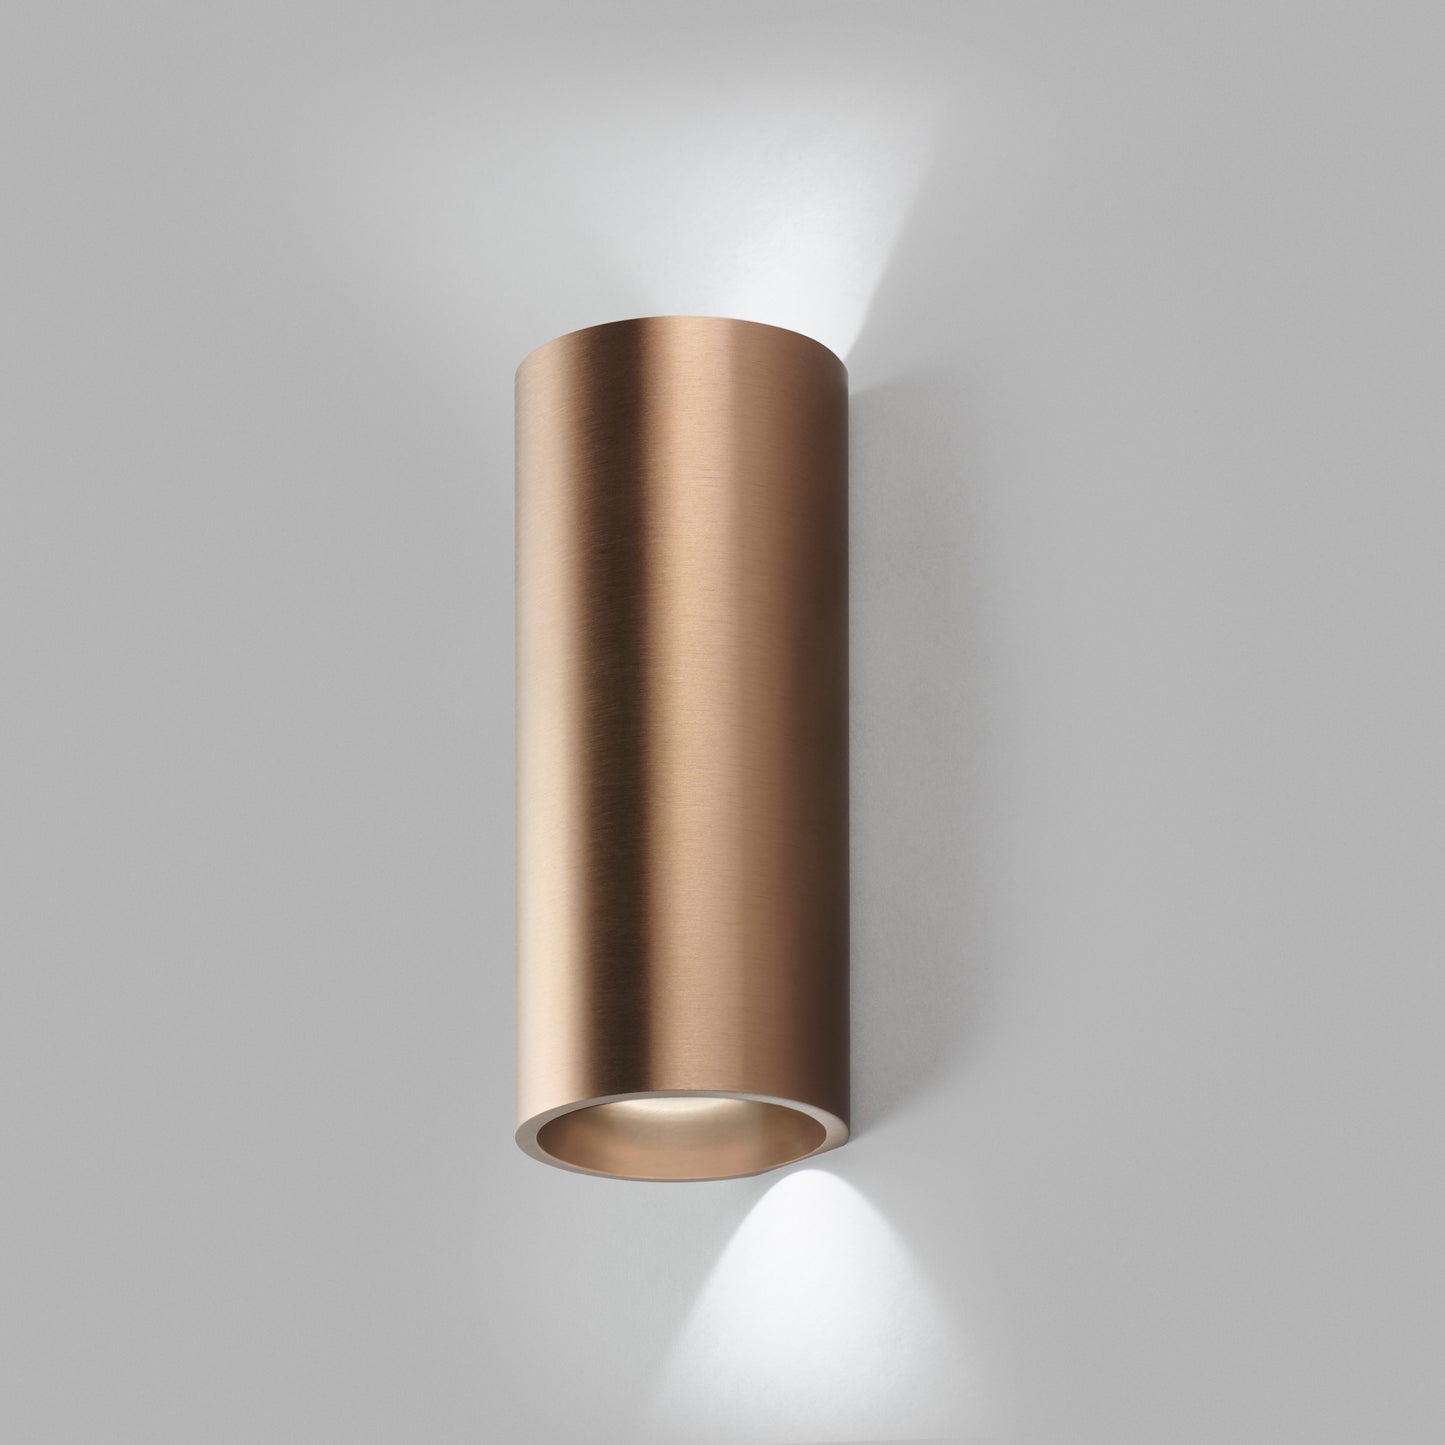 Light Point - Zero w2 væglampe - Rosegold